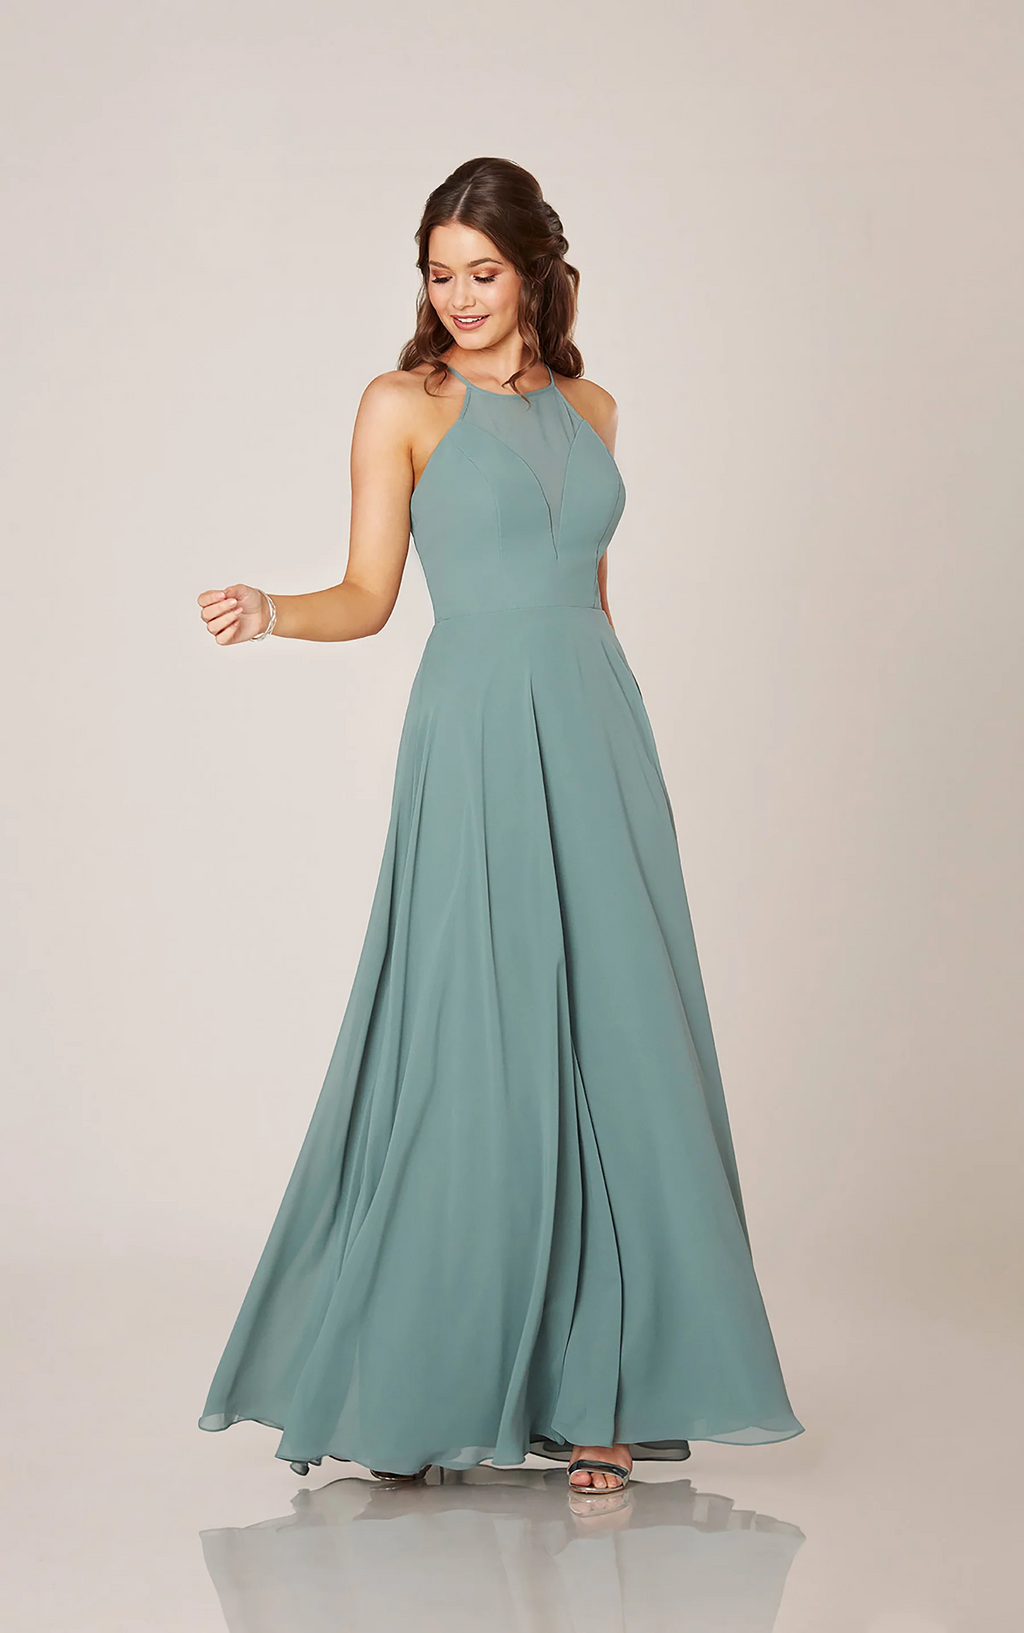 Sorella Vita Dress Style 9292 (Eucalptus-Size 12) Prom, Ball., Black-tie, Bridesmaid, Pageant